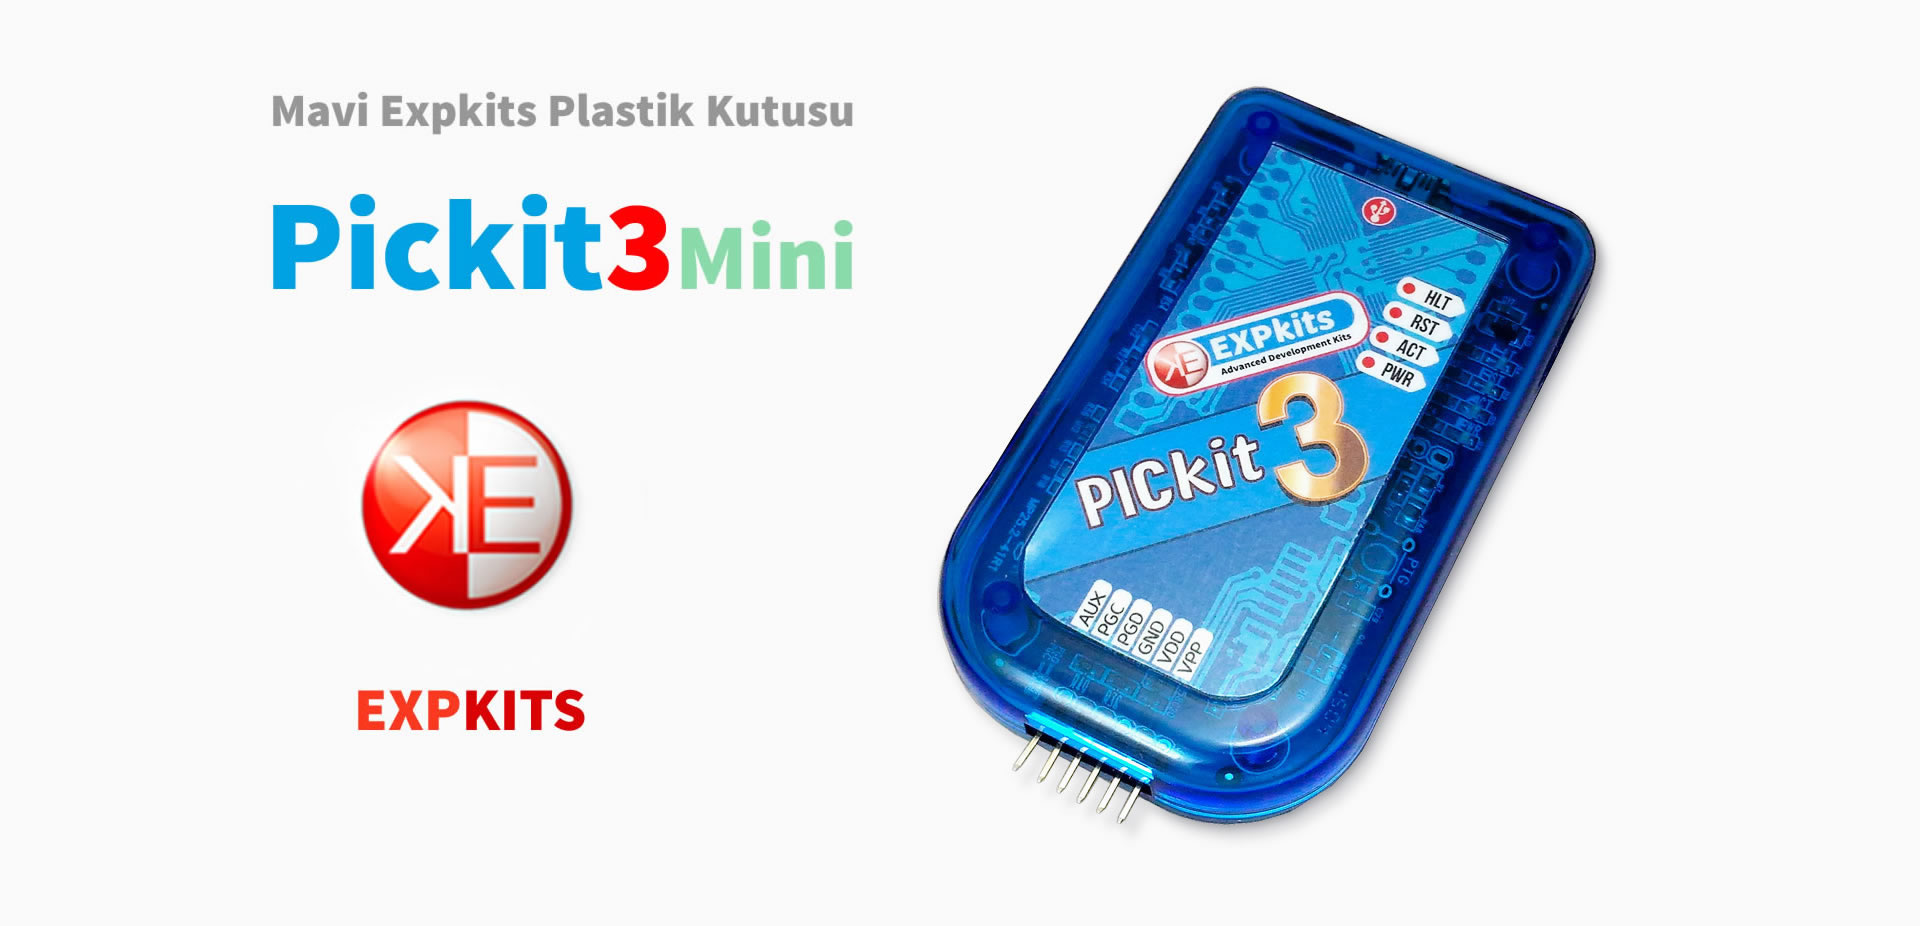 Expkits, Pickit3 Mini Clone, Plastik USB Kutu, Orjinalin %100 ayn�s� en stabil Pickit3 klonu, ABS ve Polikarbon Malzeme